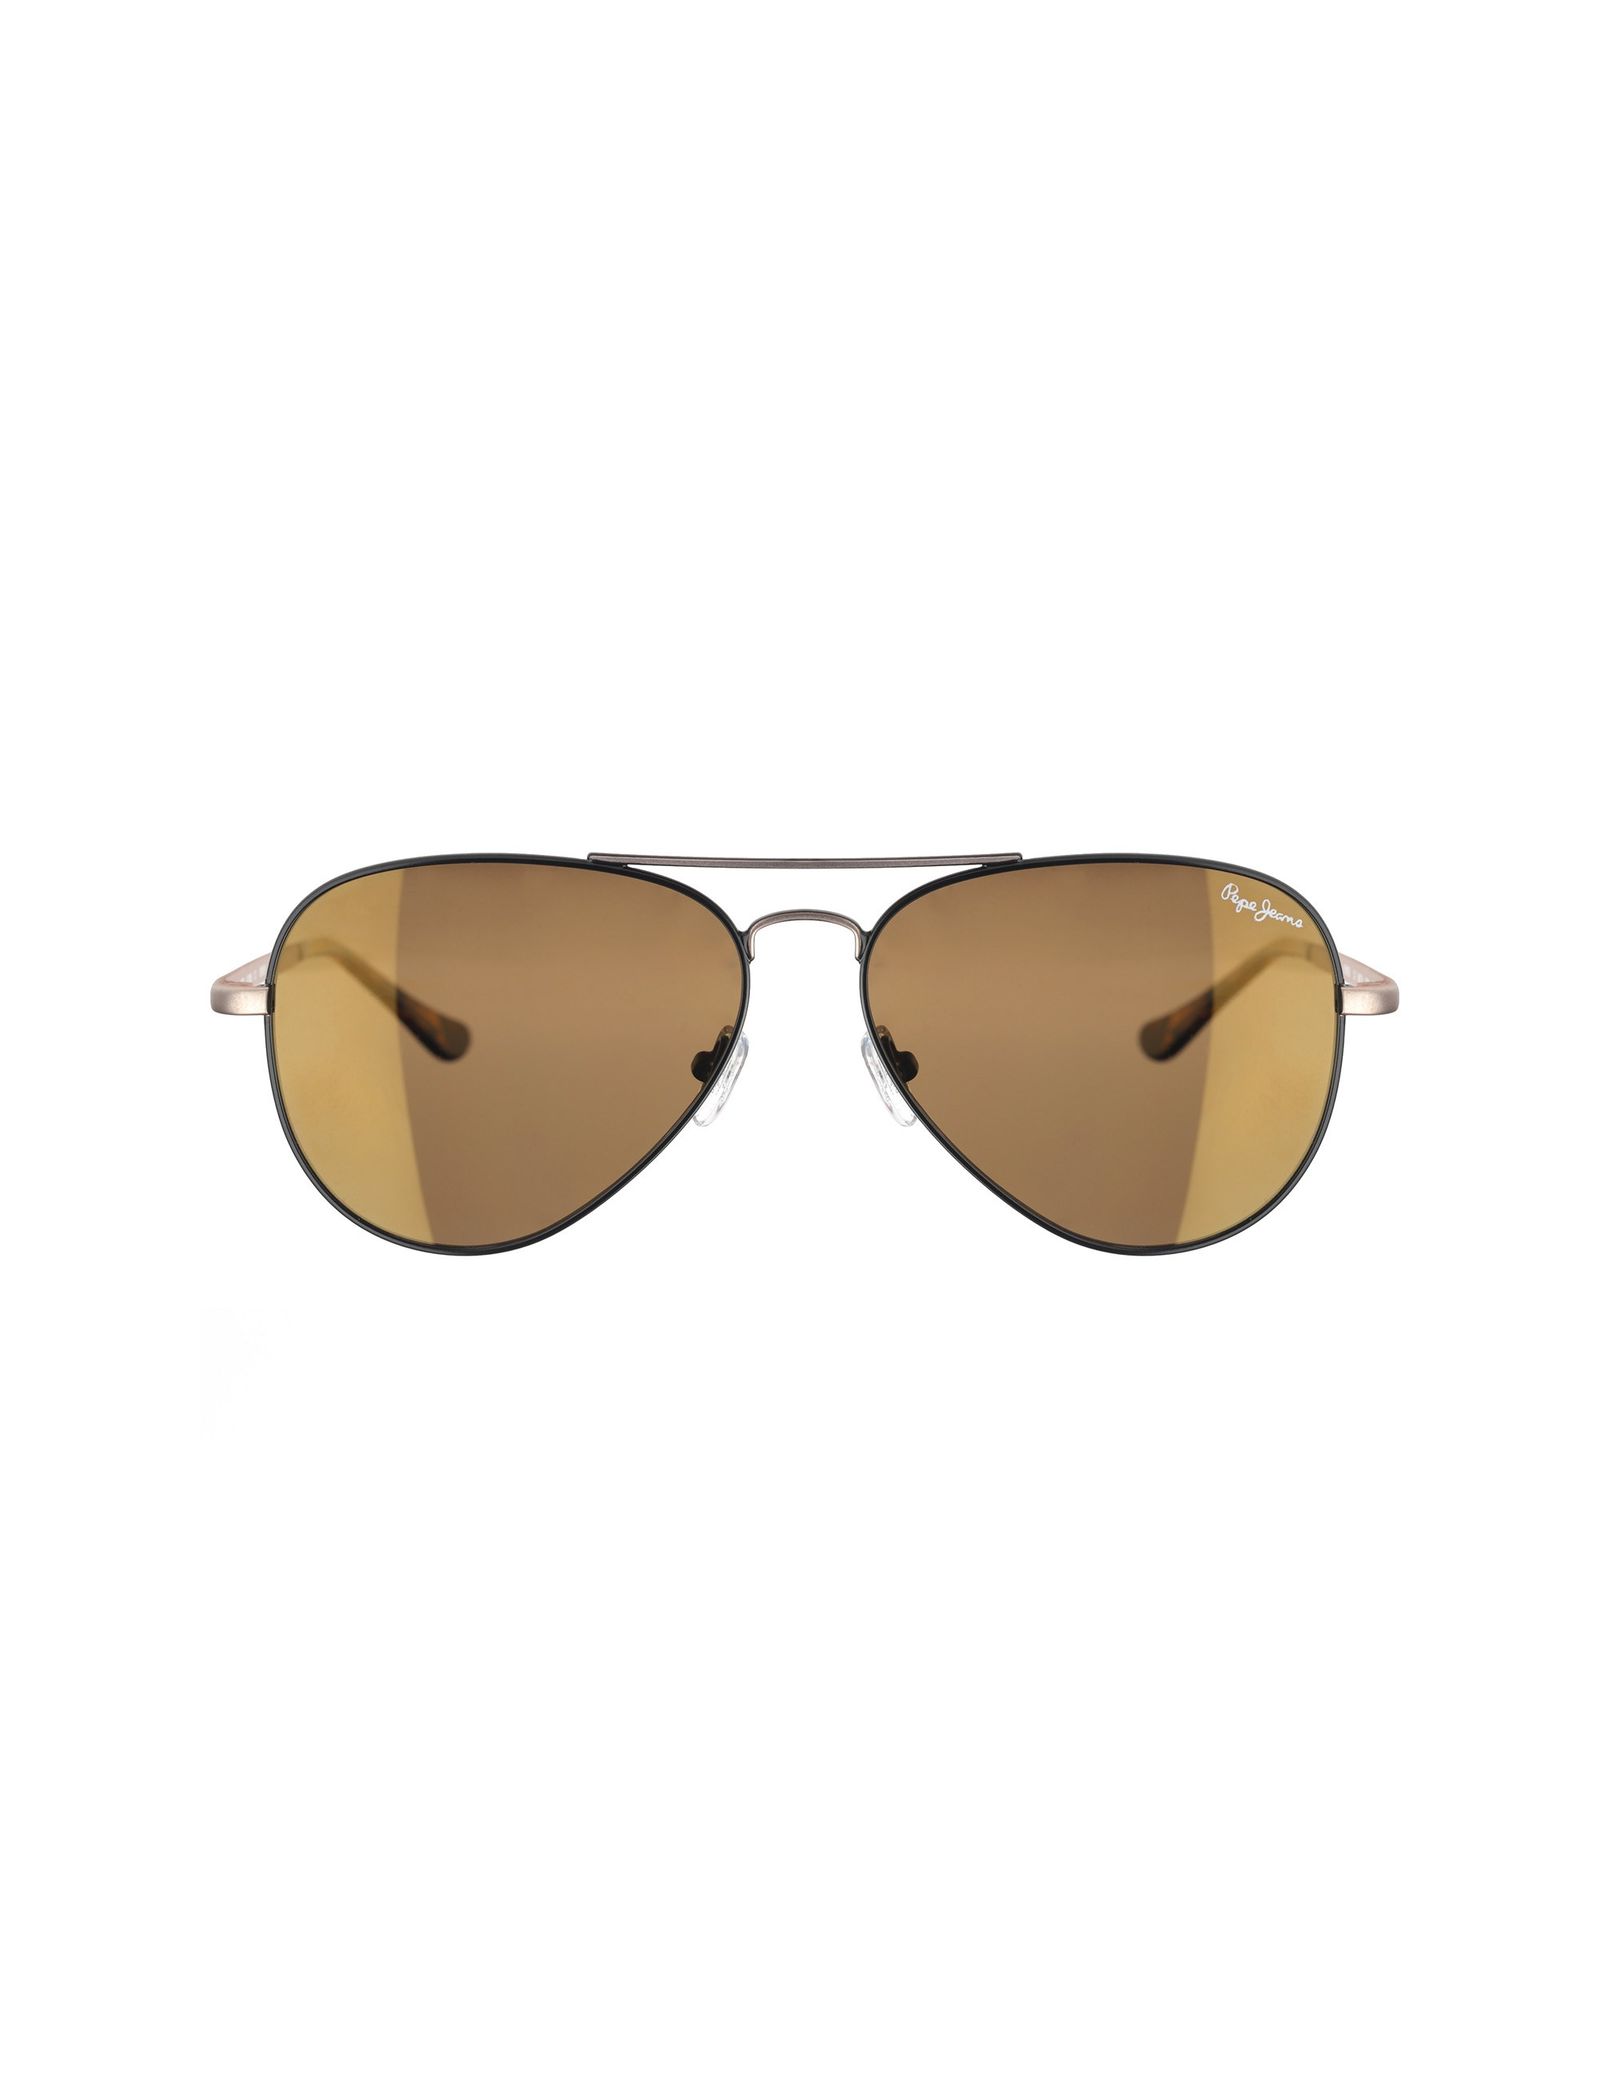 عینک آفتابی خلبانی زنانه - پپه جینز - مشکي و طلايي - 2